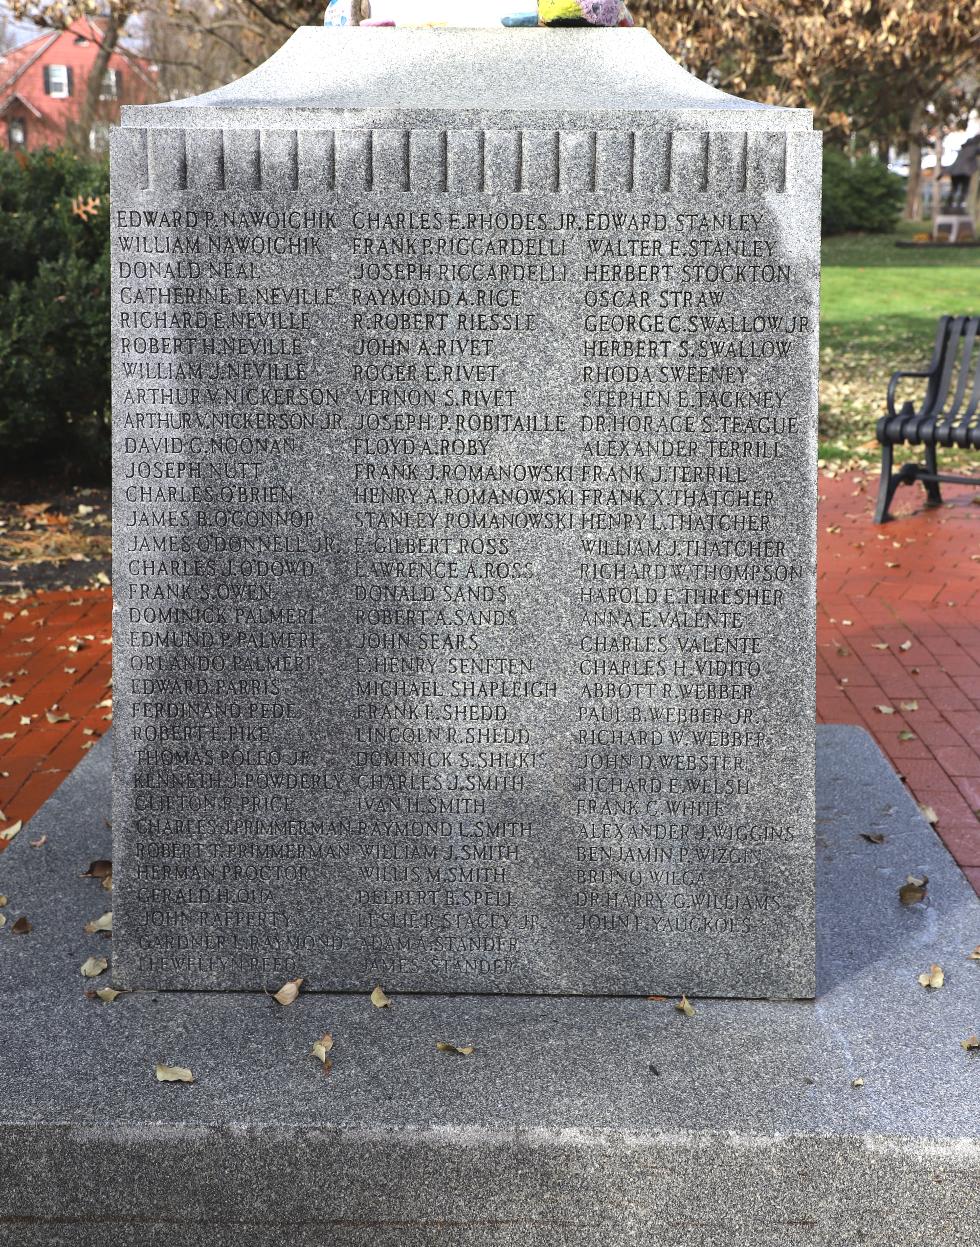 Bedford Massachusetts World War II Veterans Memorial